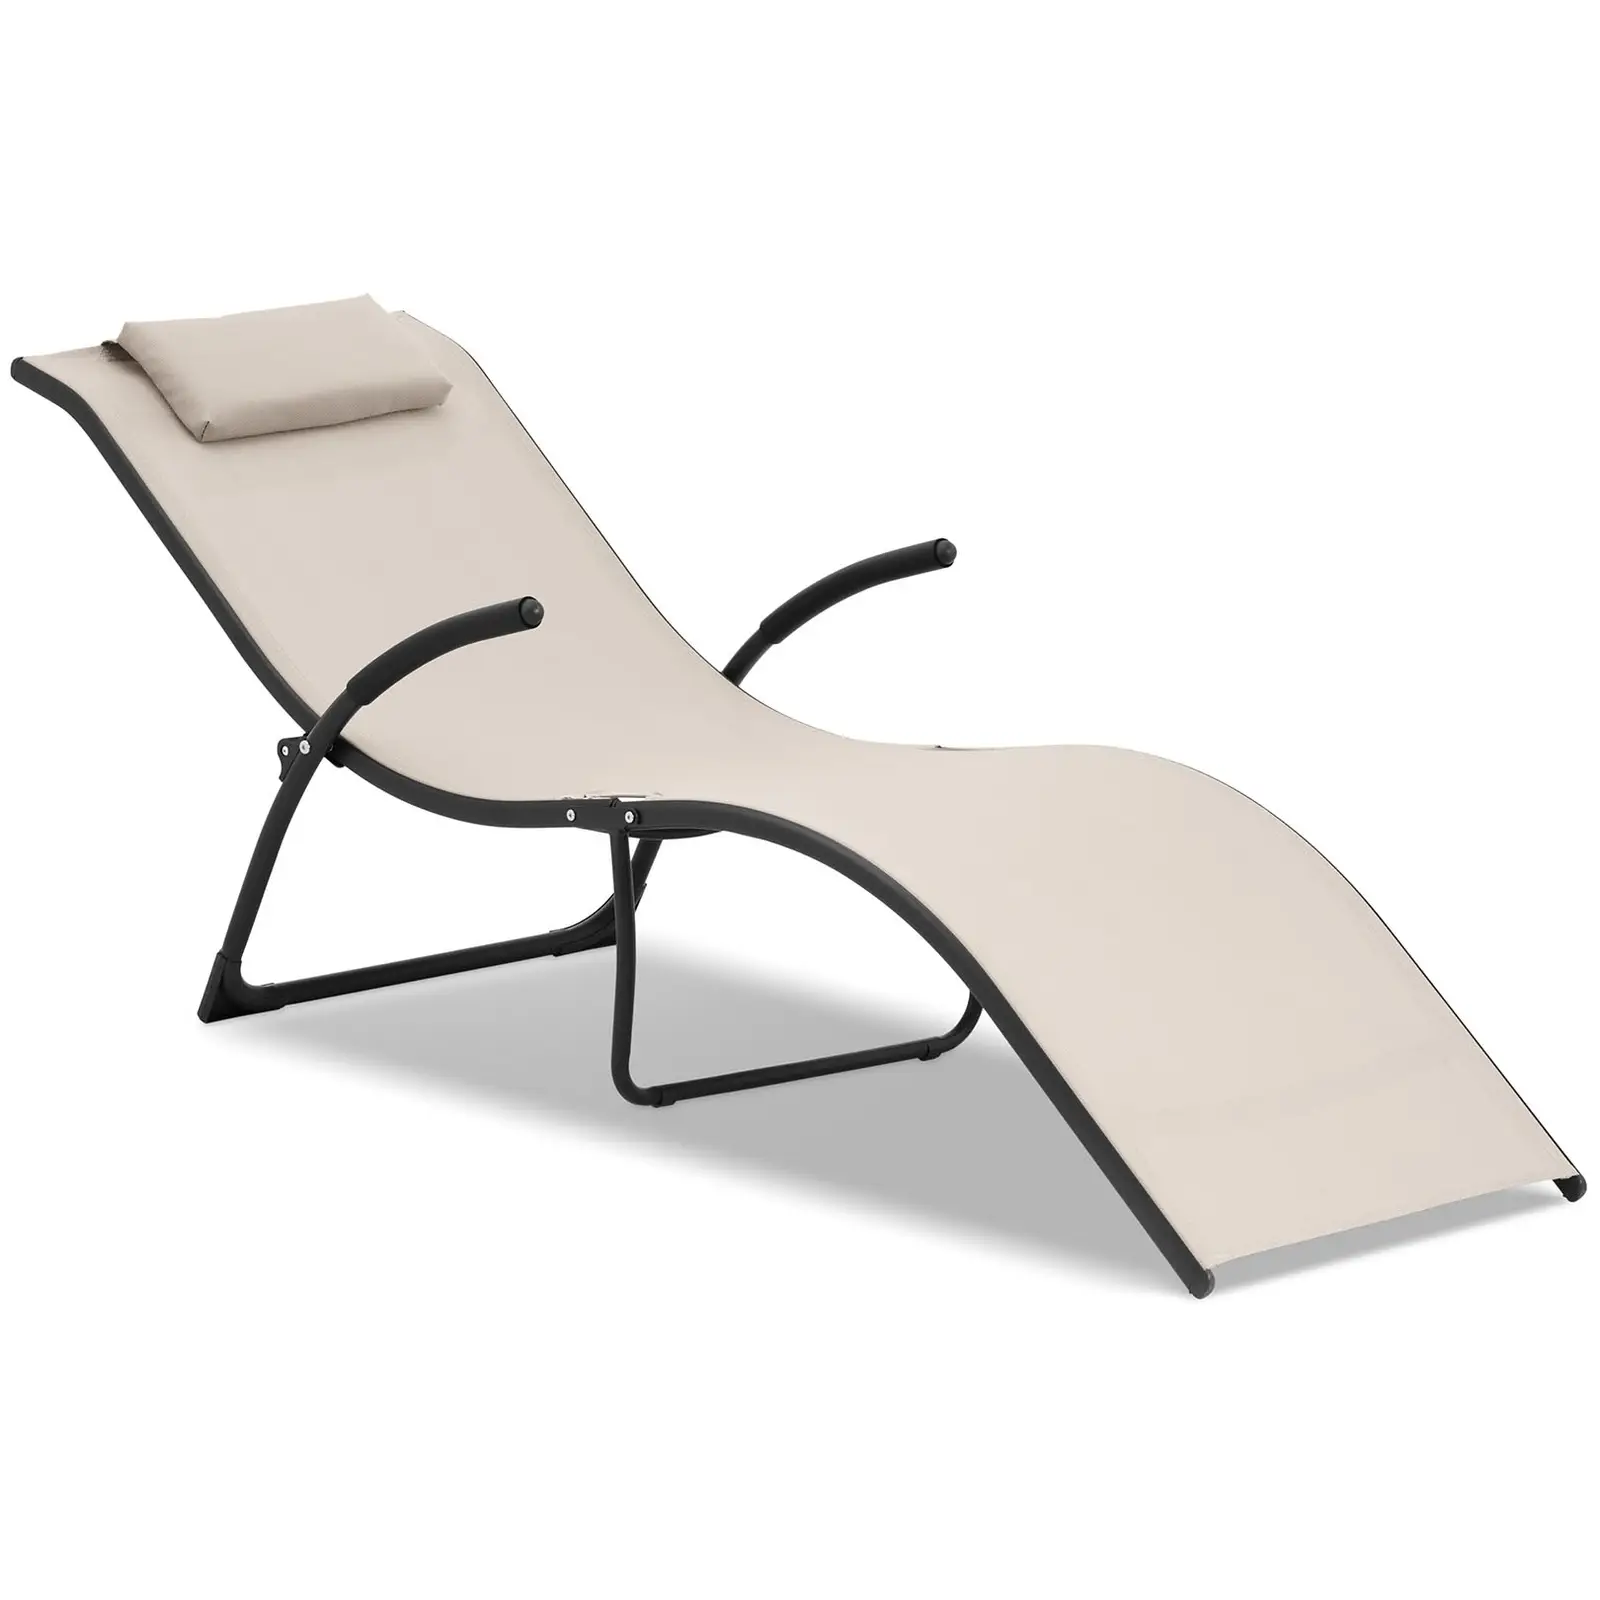 Beige wave outdoor lounge chair - steel frame